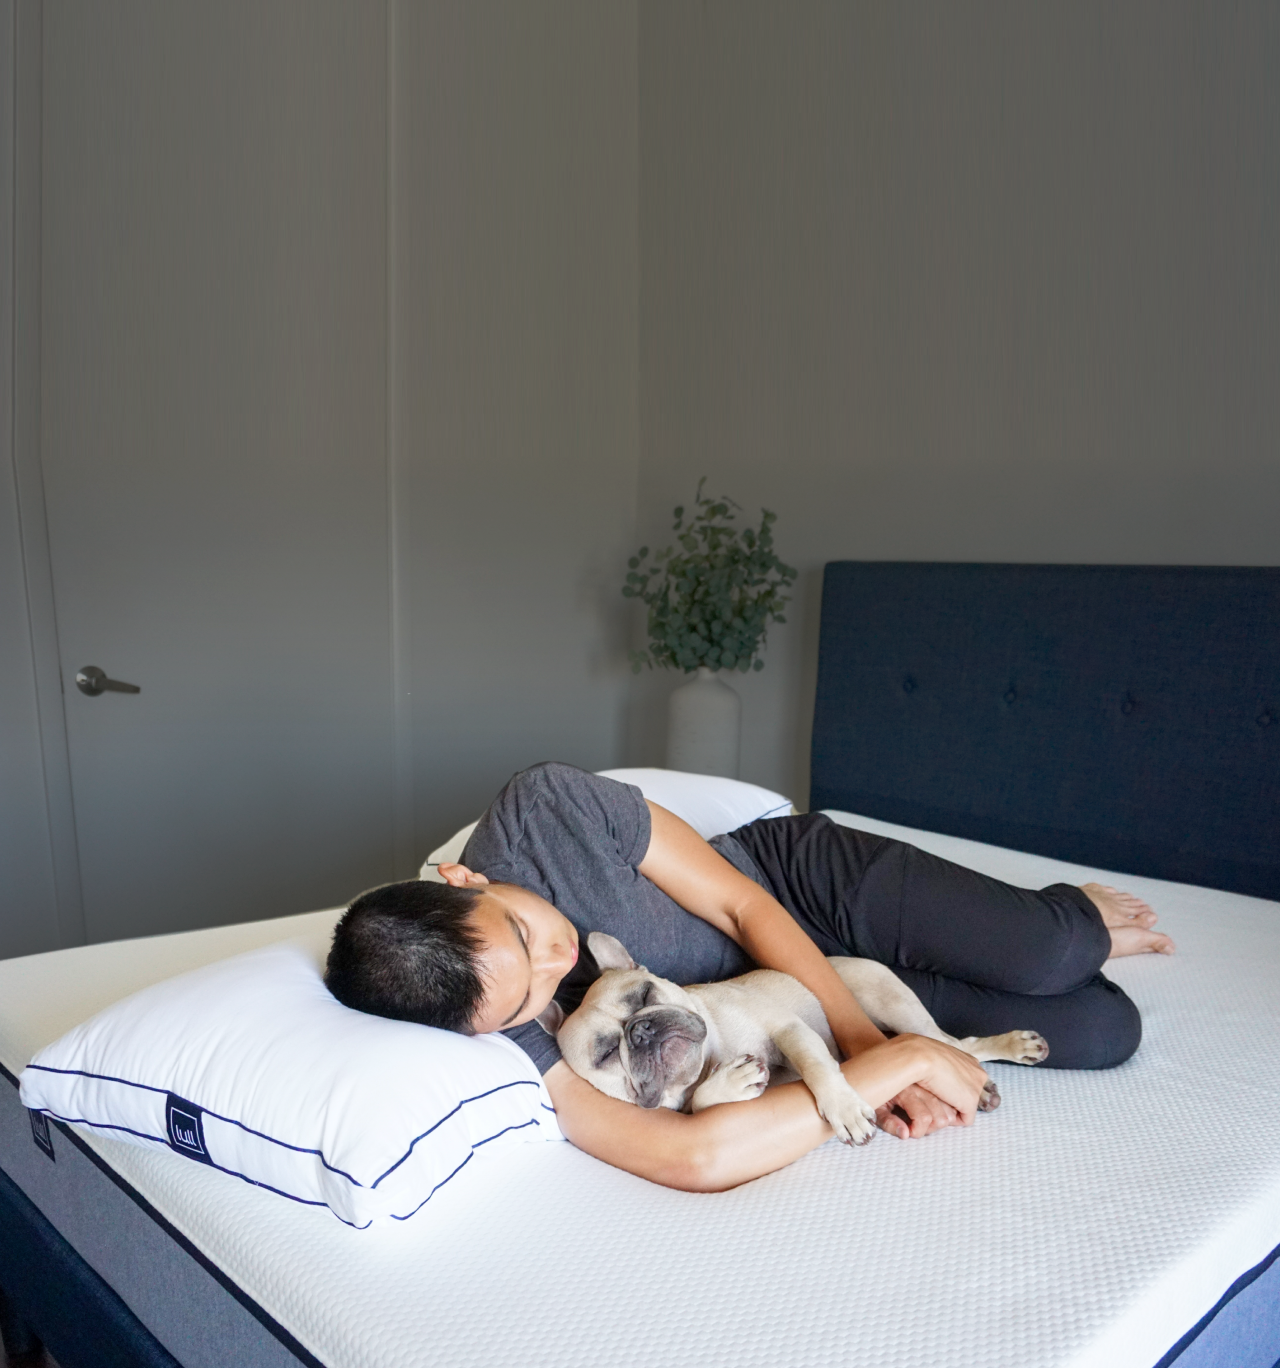 A man and his dog sound asleep on a lull mattress.